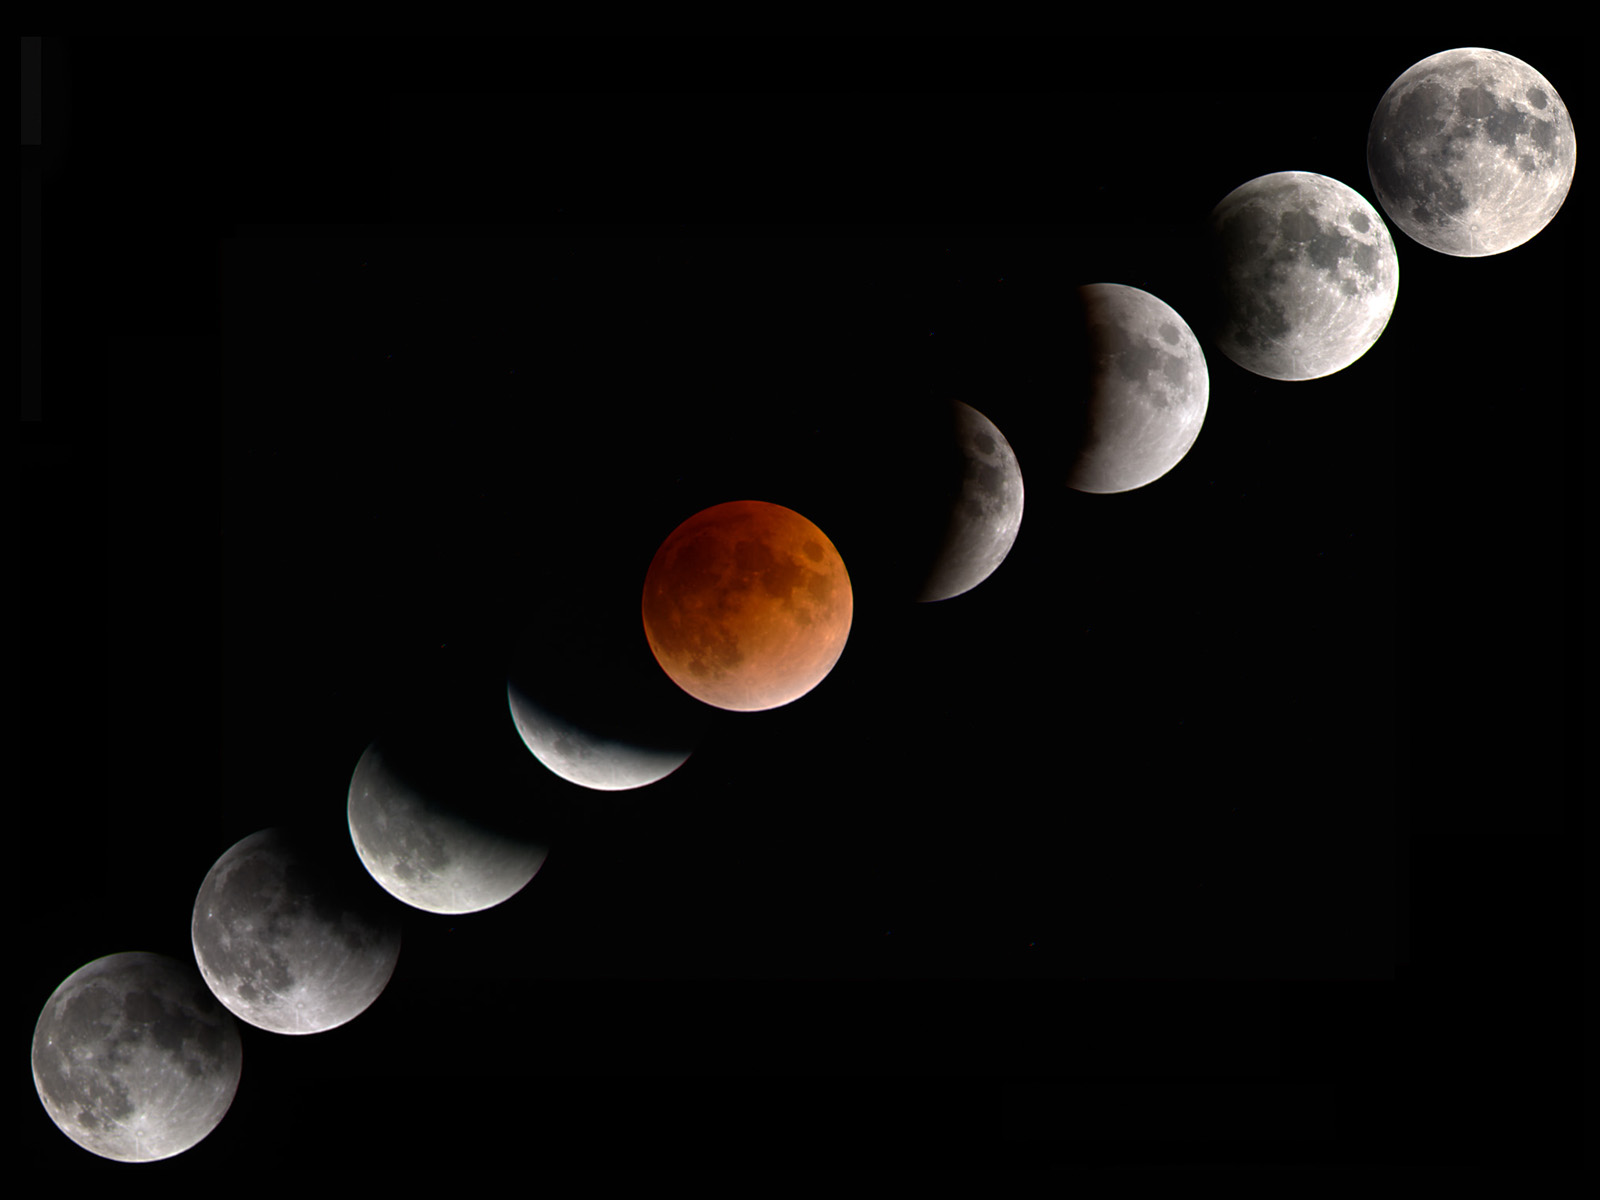 lunar wallpaper,moon,lunar eclipse,celestial event,eclipse,astronomical object